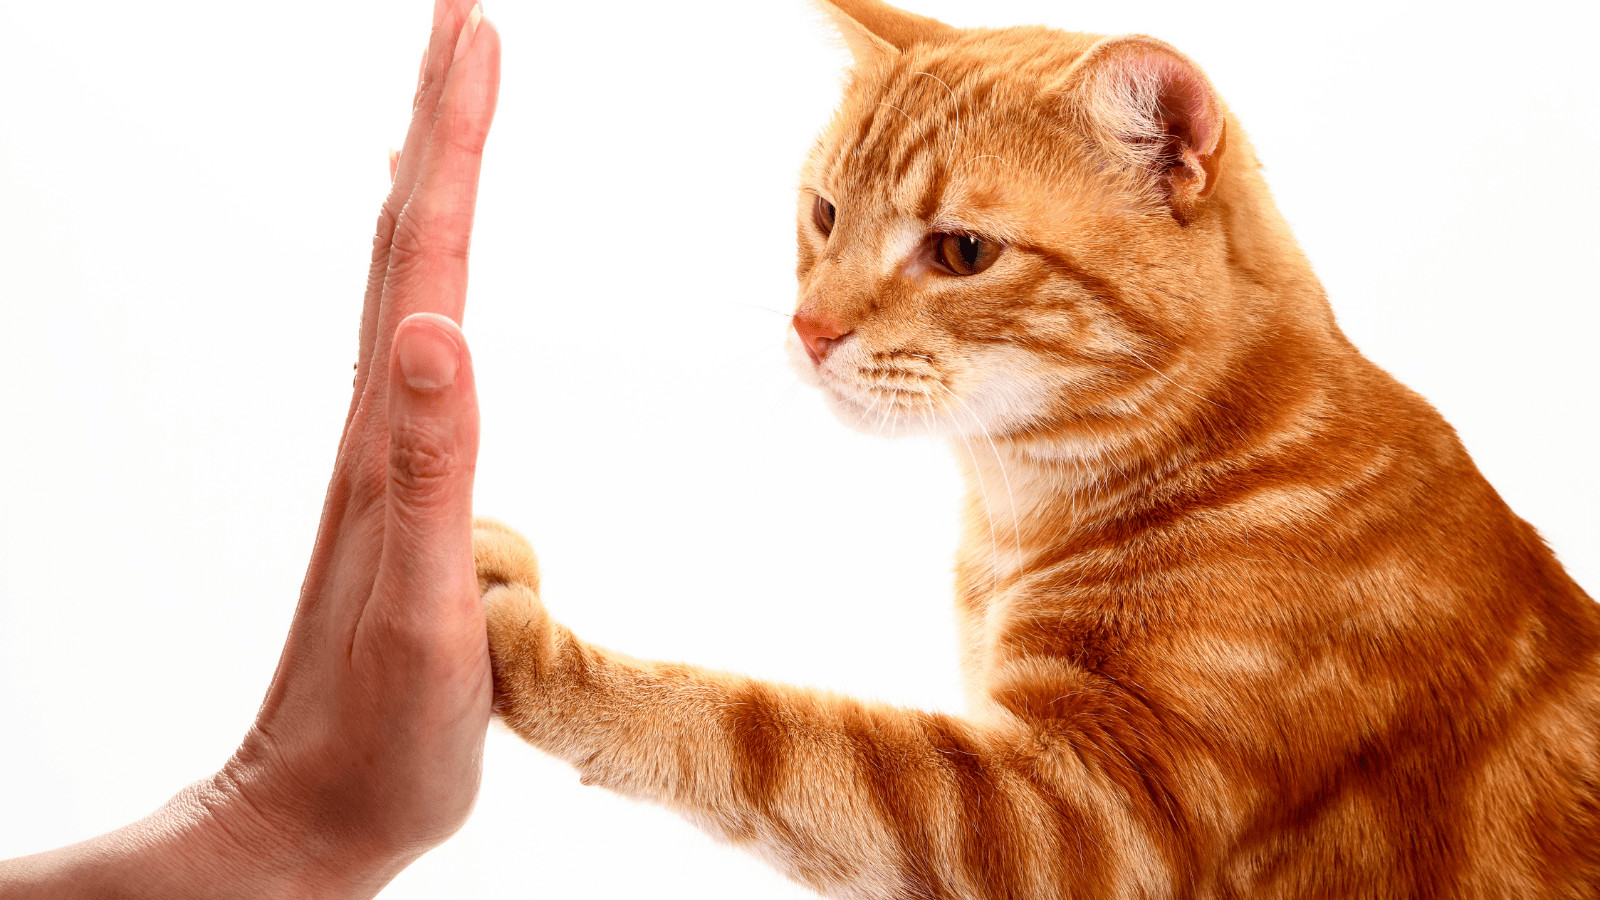 How To Train A Cat To Do Tricks